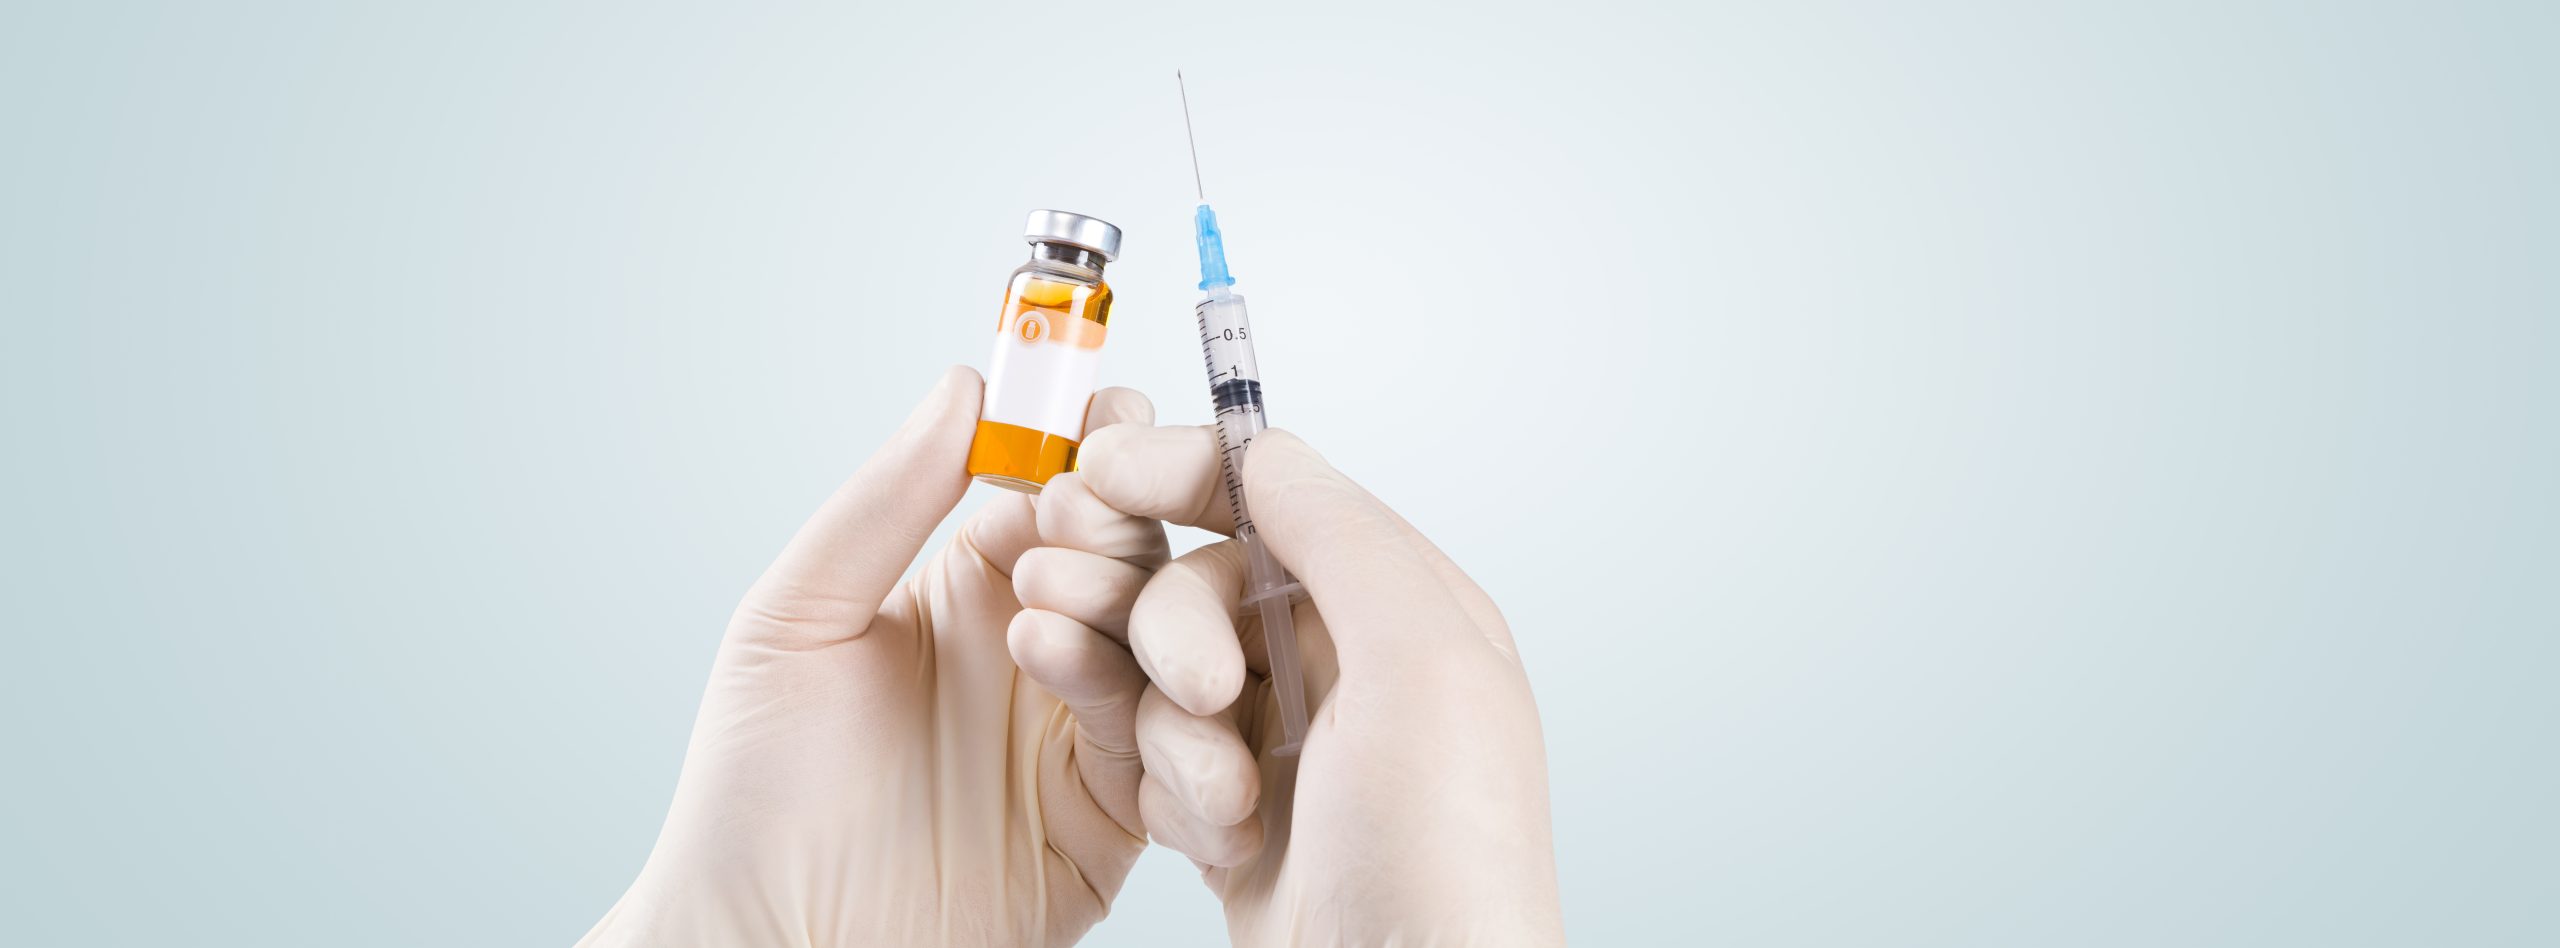 vecteezy hand holding syringe with vaccine against corona virus 6544089 322 scaled